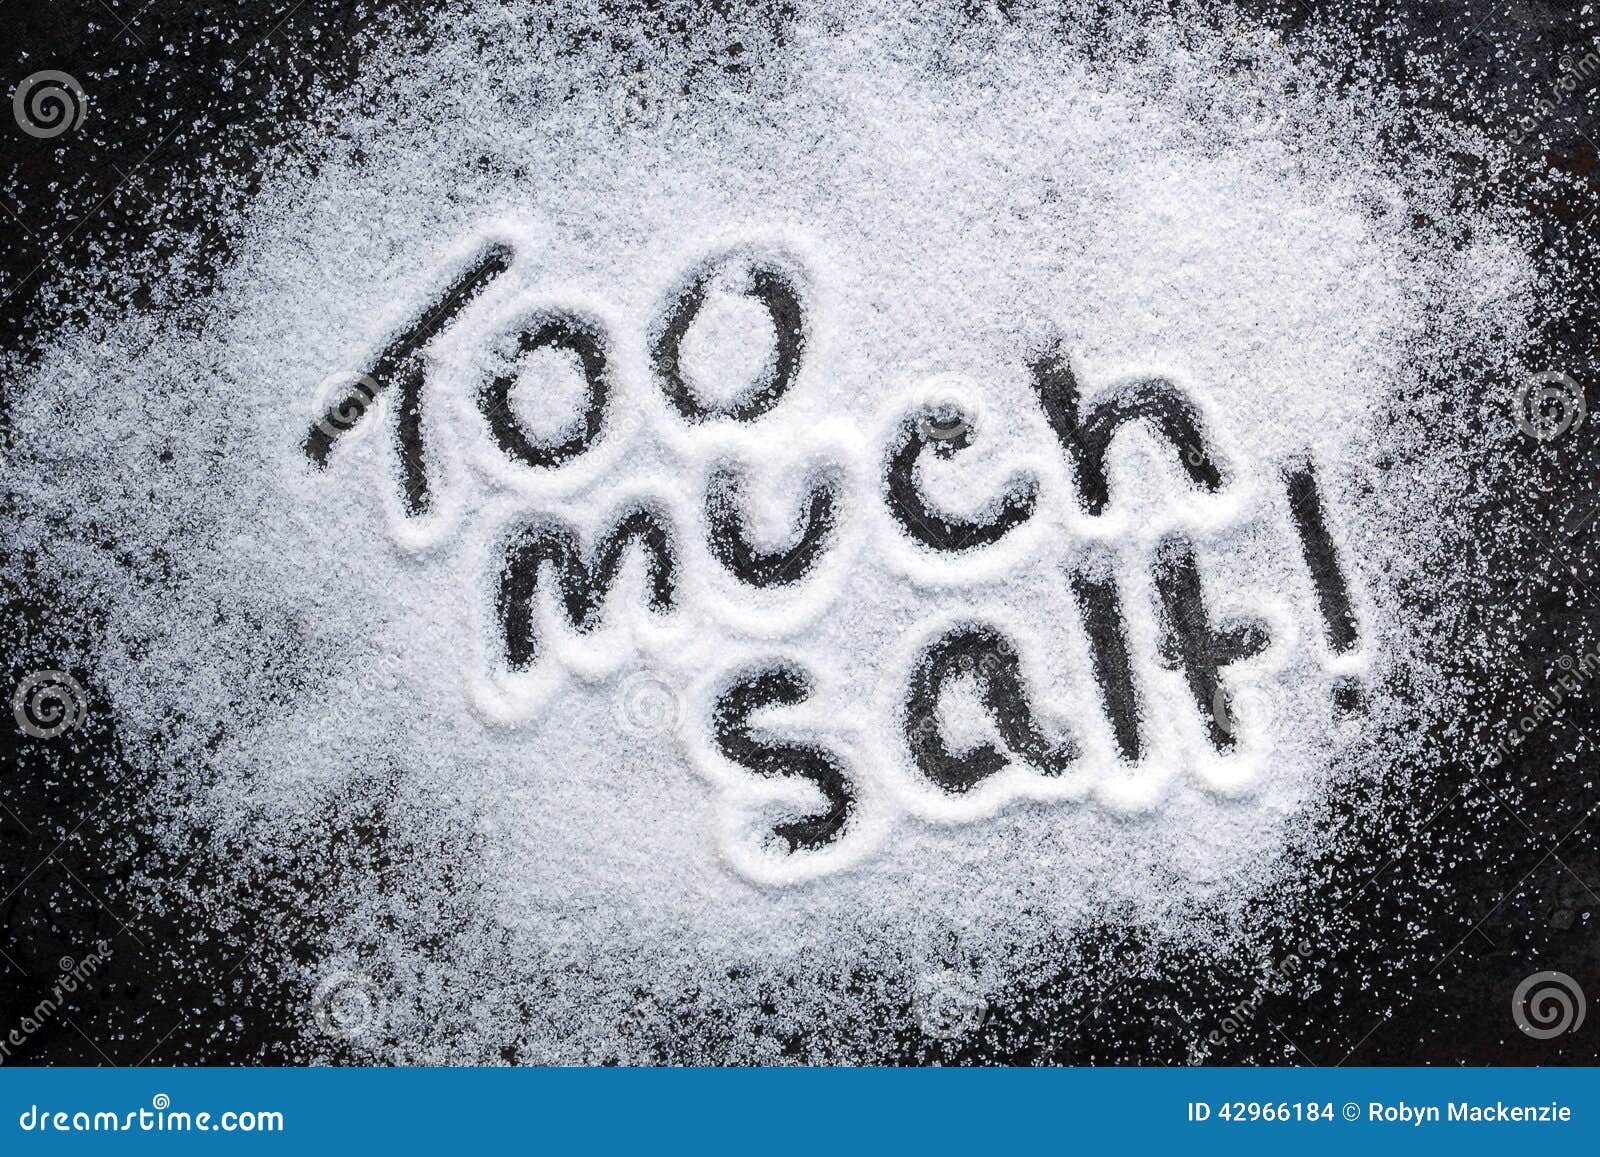 Too Much Salt Stock Photo - Image: 42966184